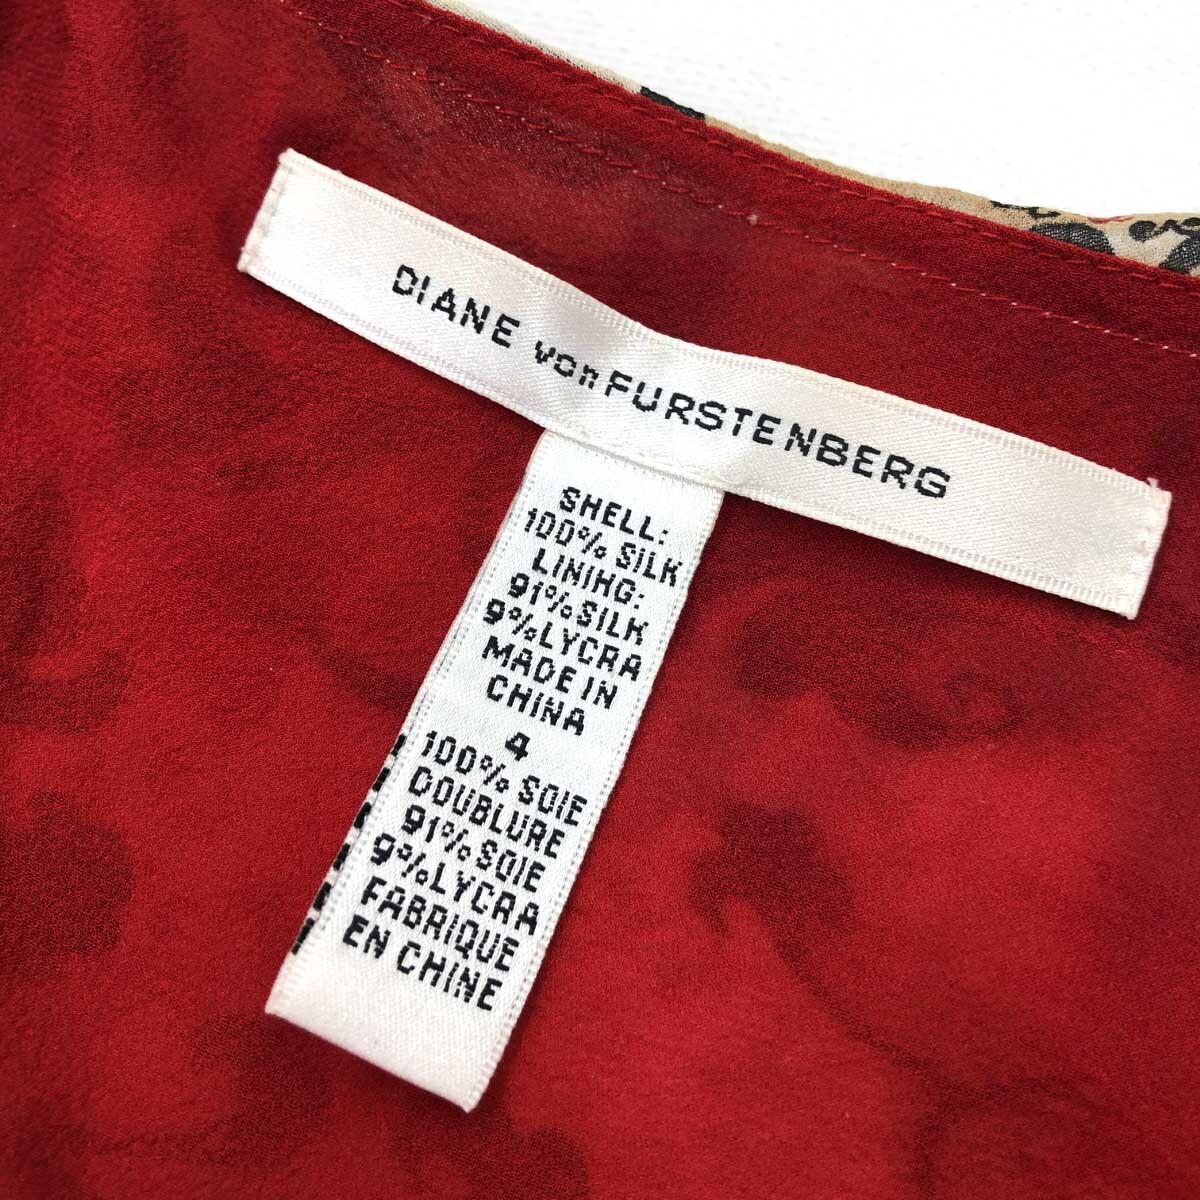 *DIANEvon FURSTENBERG Diane phone fa stain балка g безрукавка блуза размер 4* розовый шелк женский tops оборка 